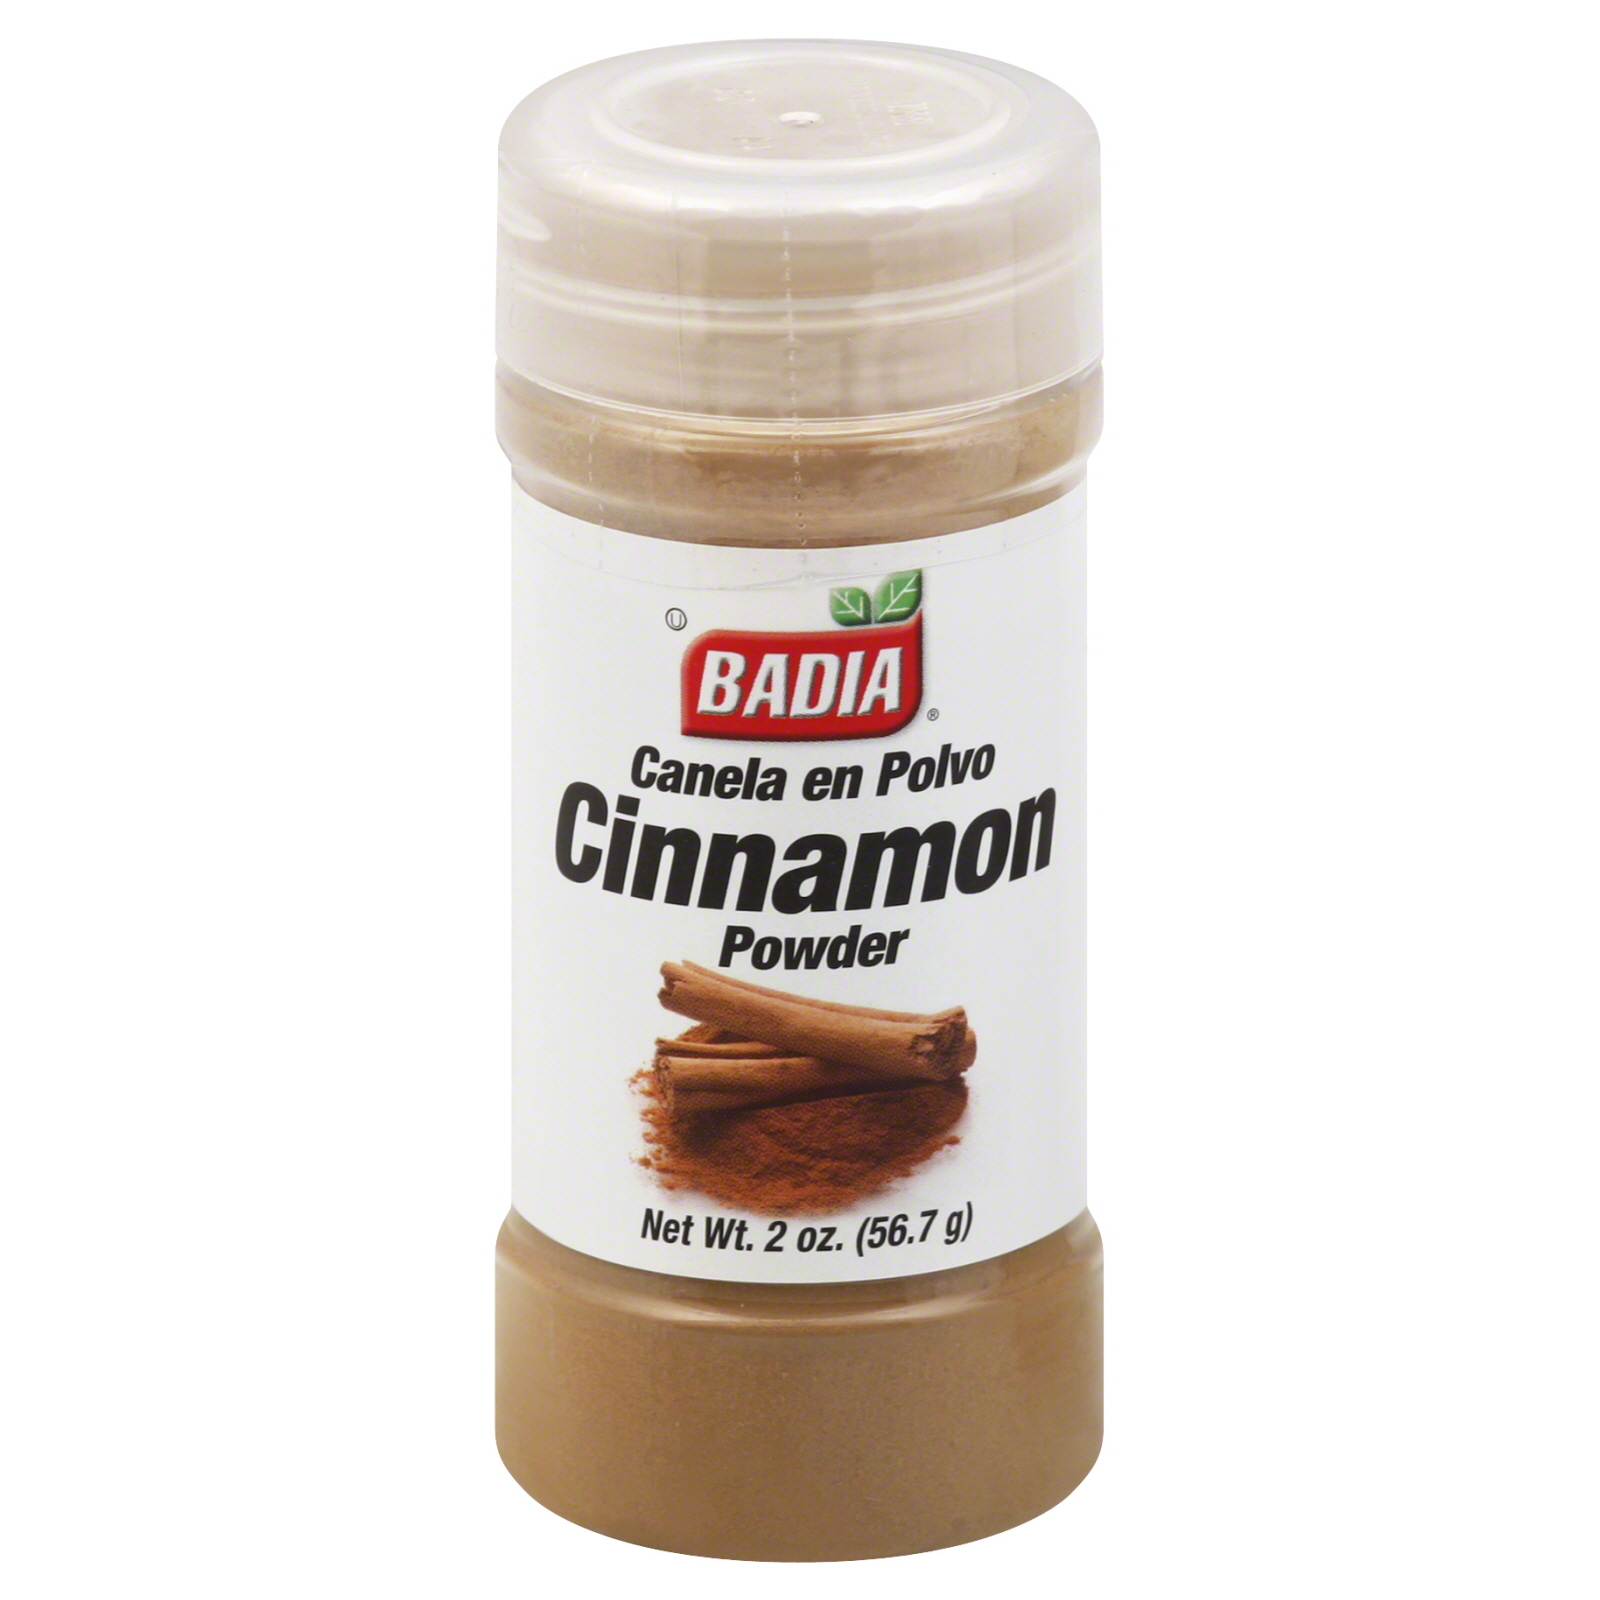 Badia Cinnamon Powder, 2 oz (56.7 g)